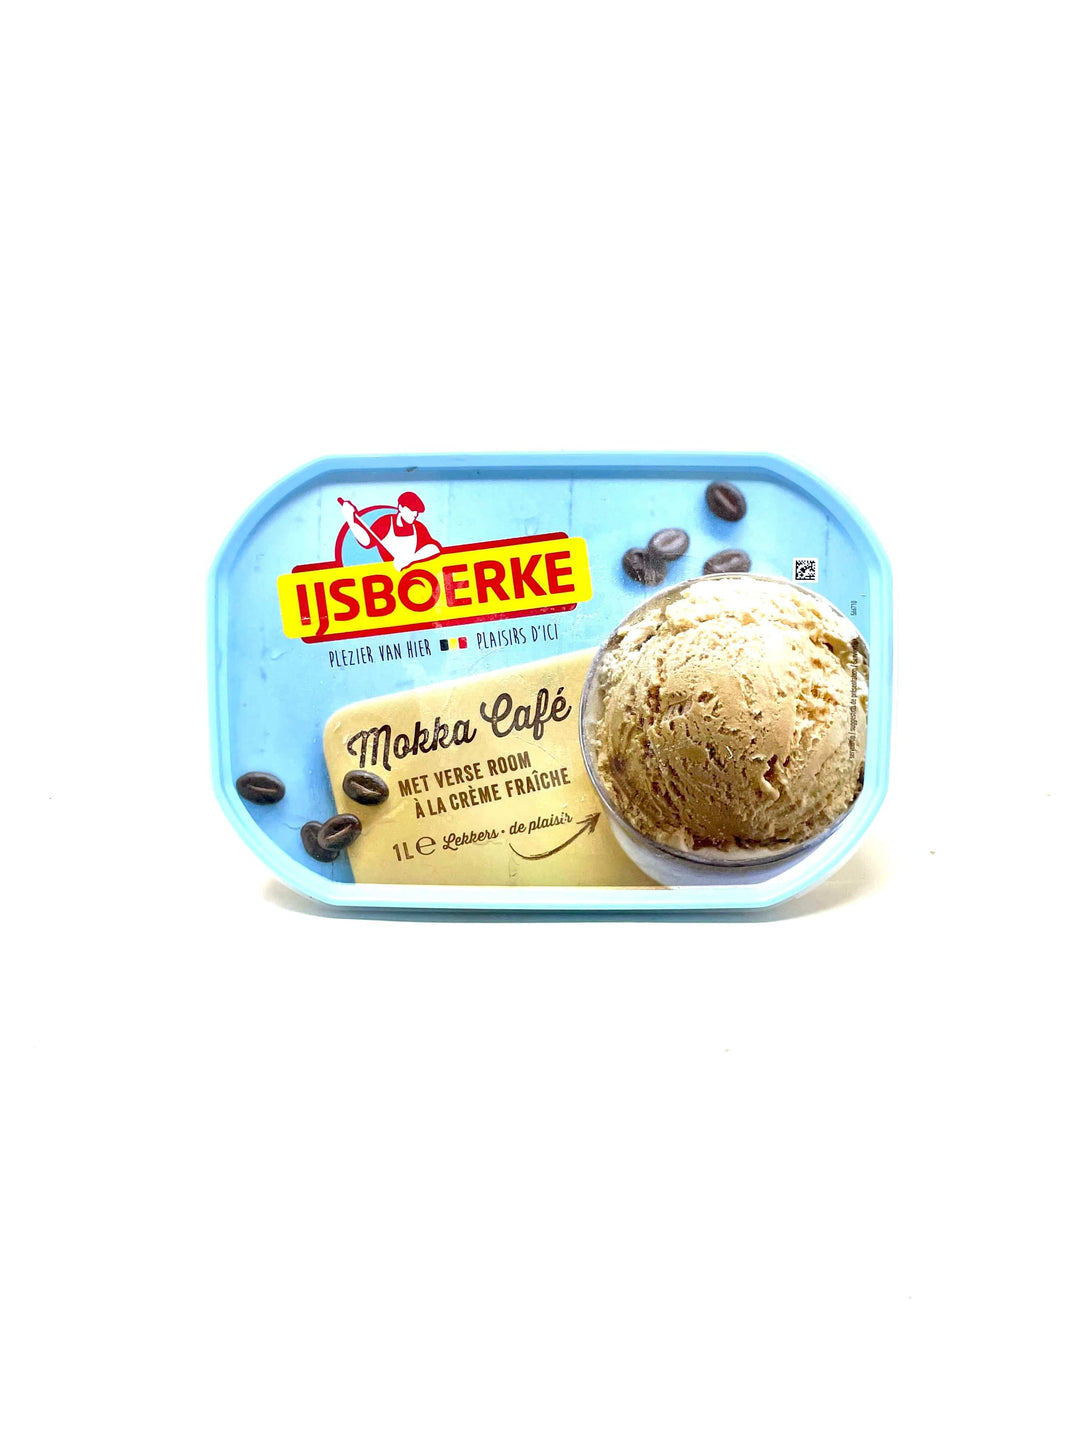 Ijsboerke Mokka Cafe Ice cream1Ltr